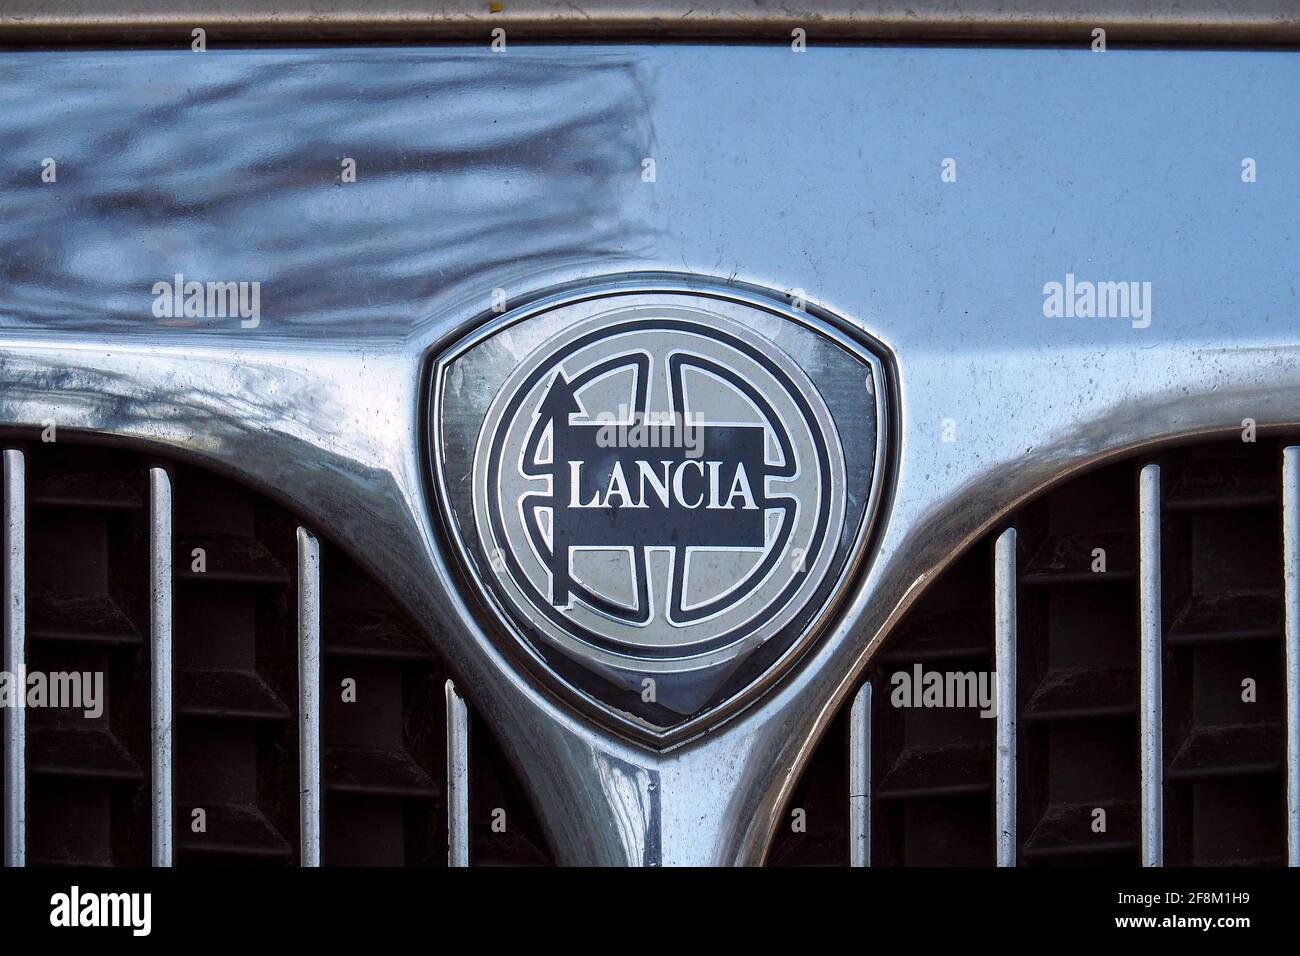 Lancia logo on a car Stock Photo